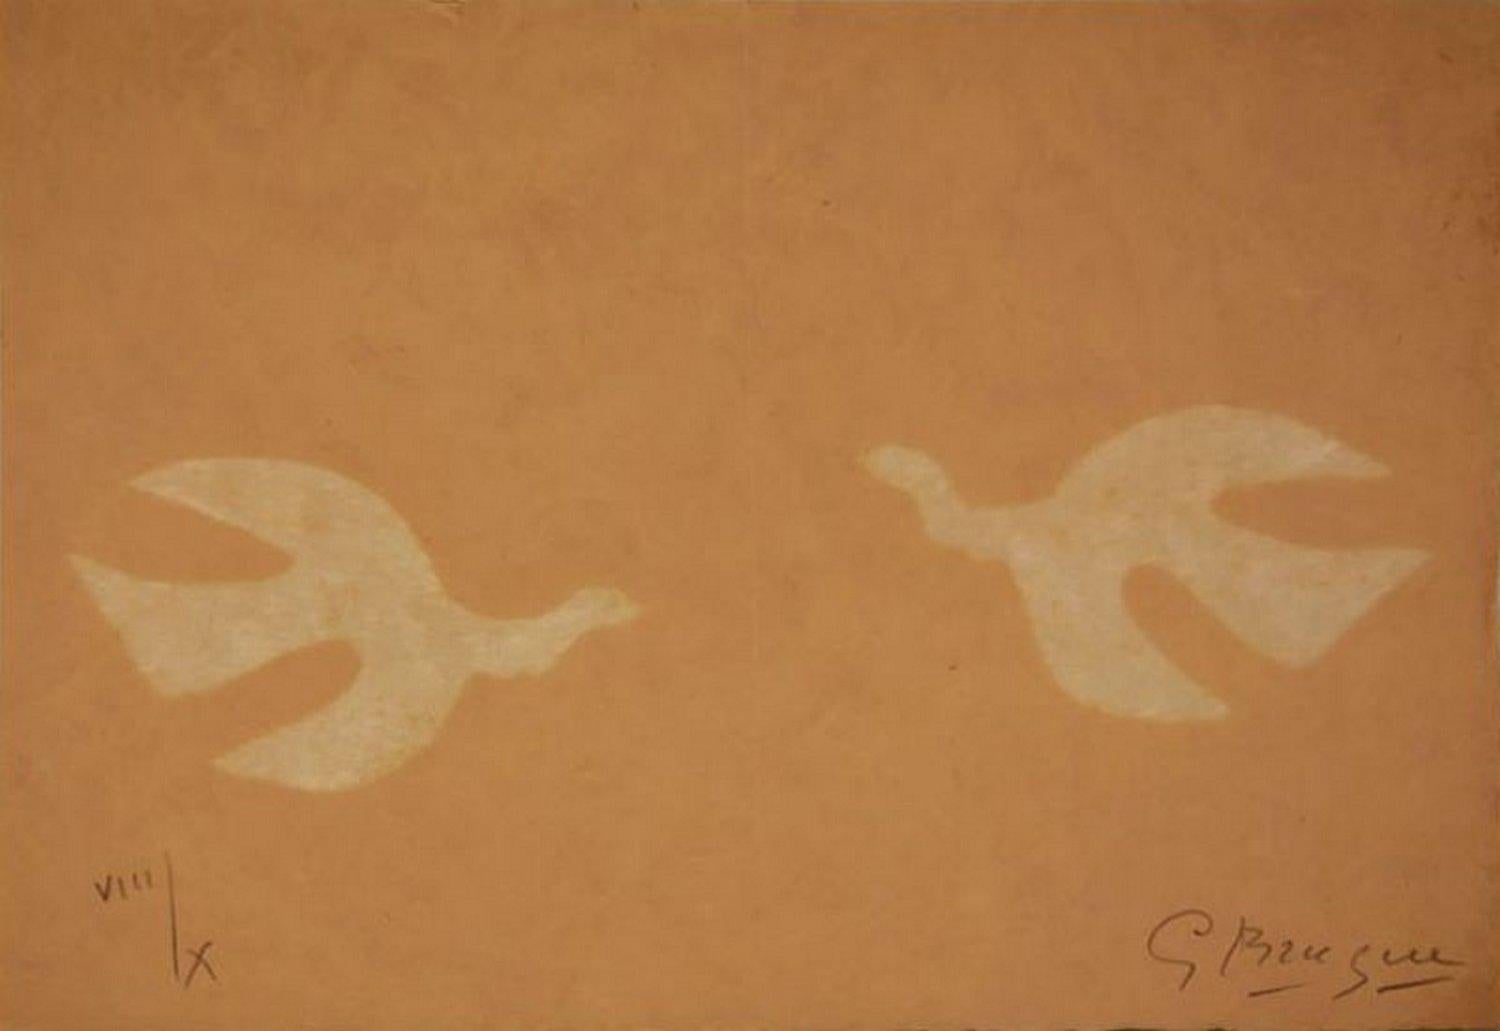 George Braque Abstract Print - Le Tir à l'arc 